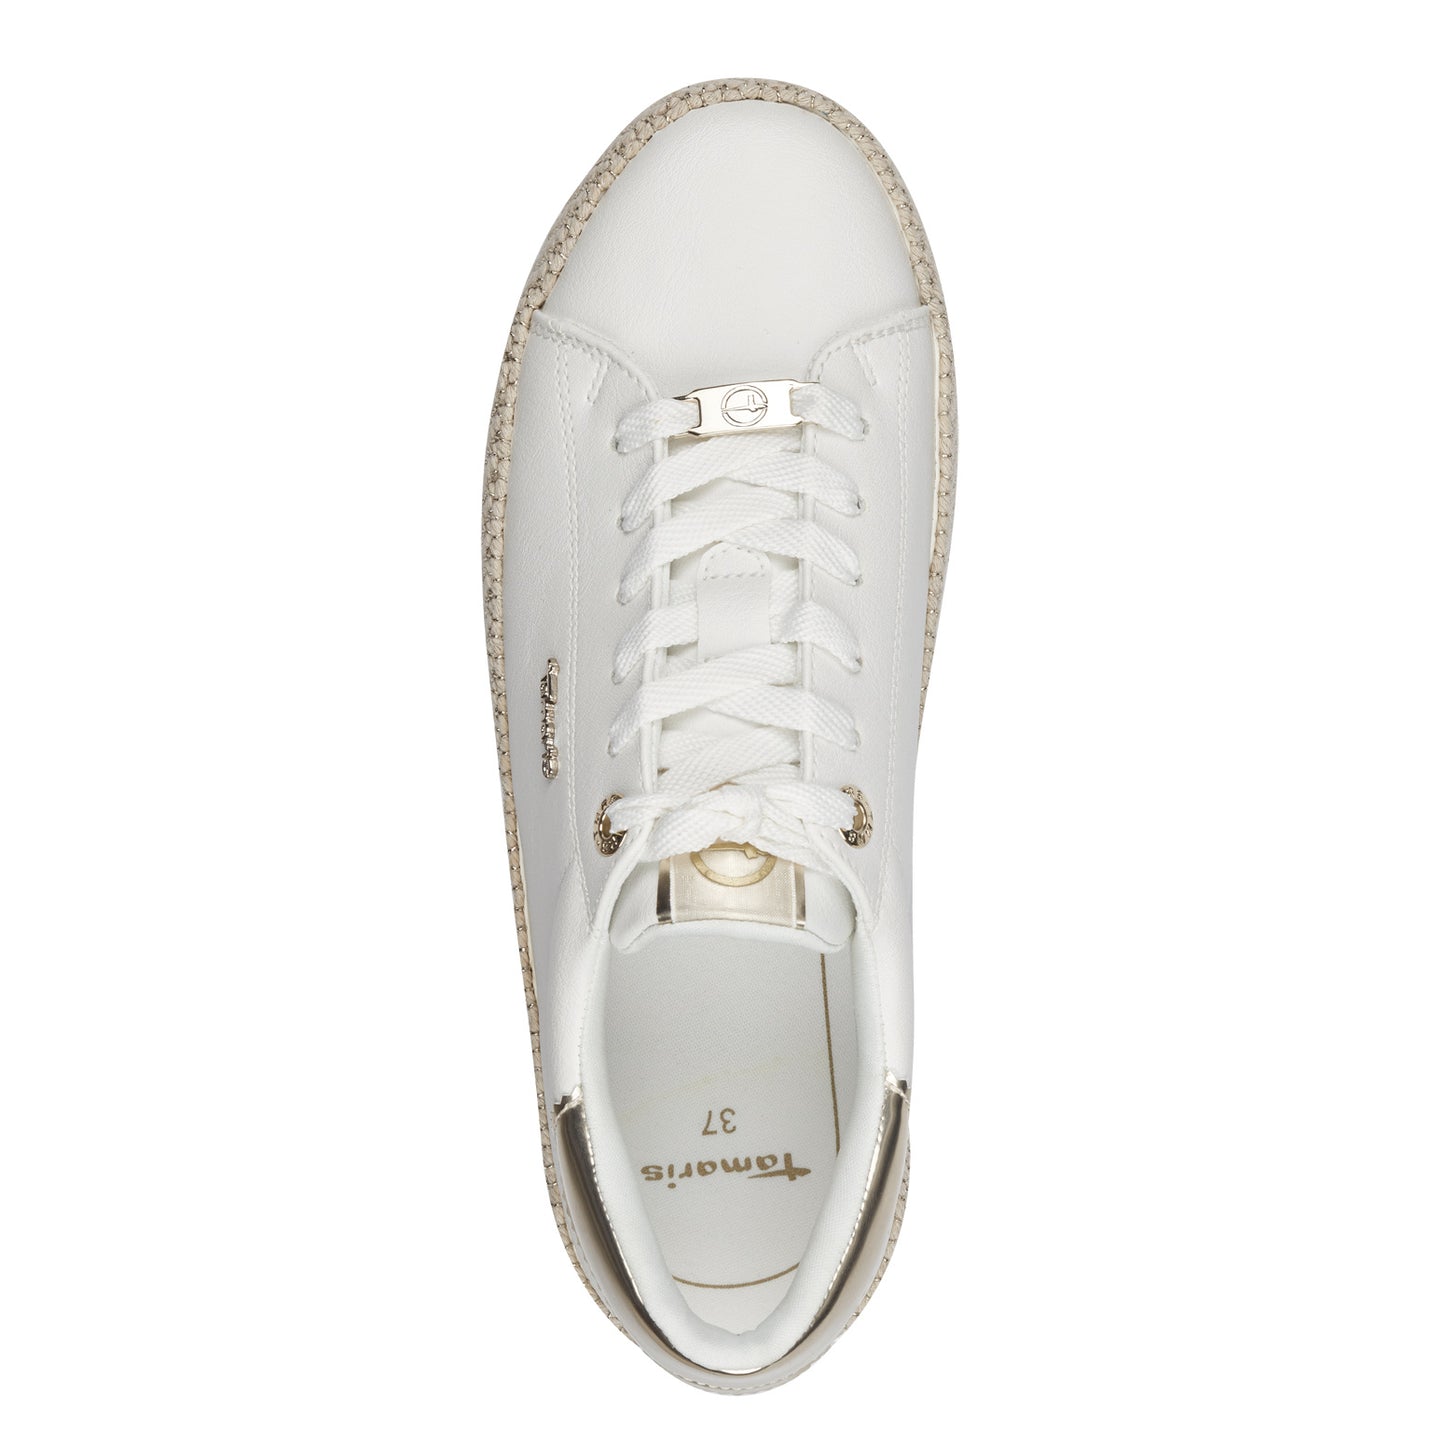 Tamaris - Ladies Shoes Trainers White, Gold (2107)